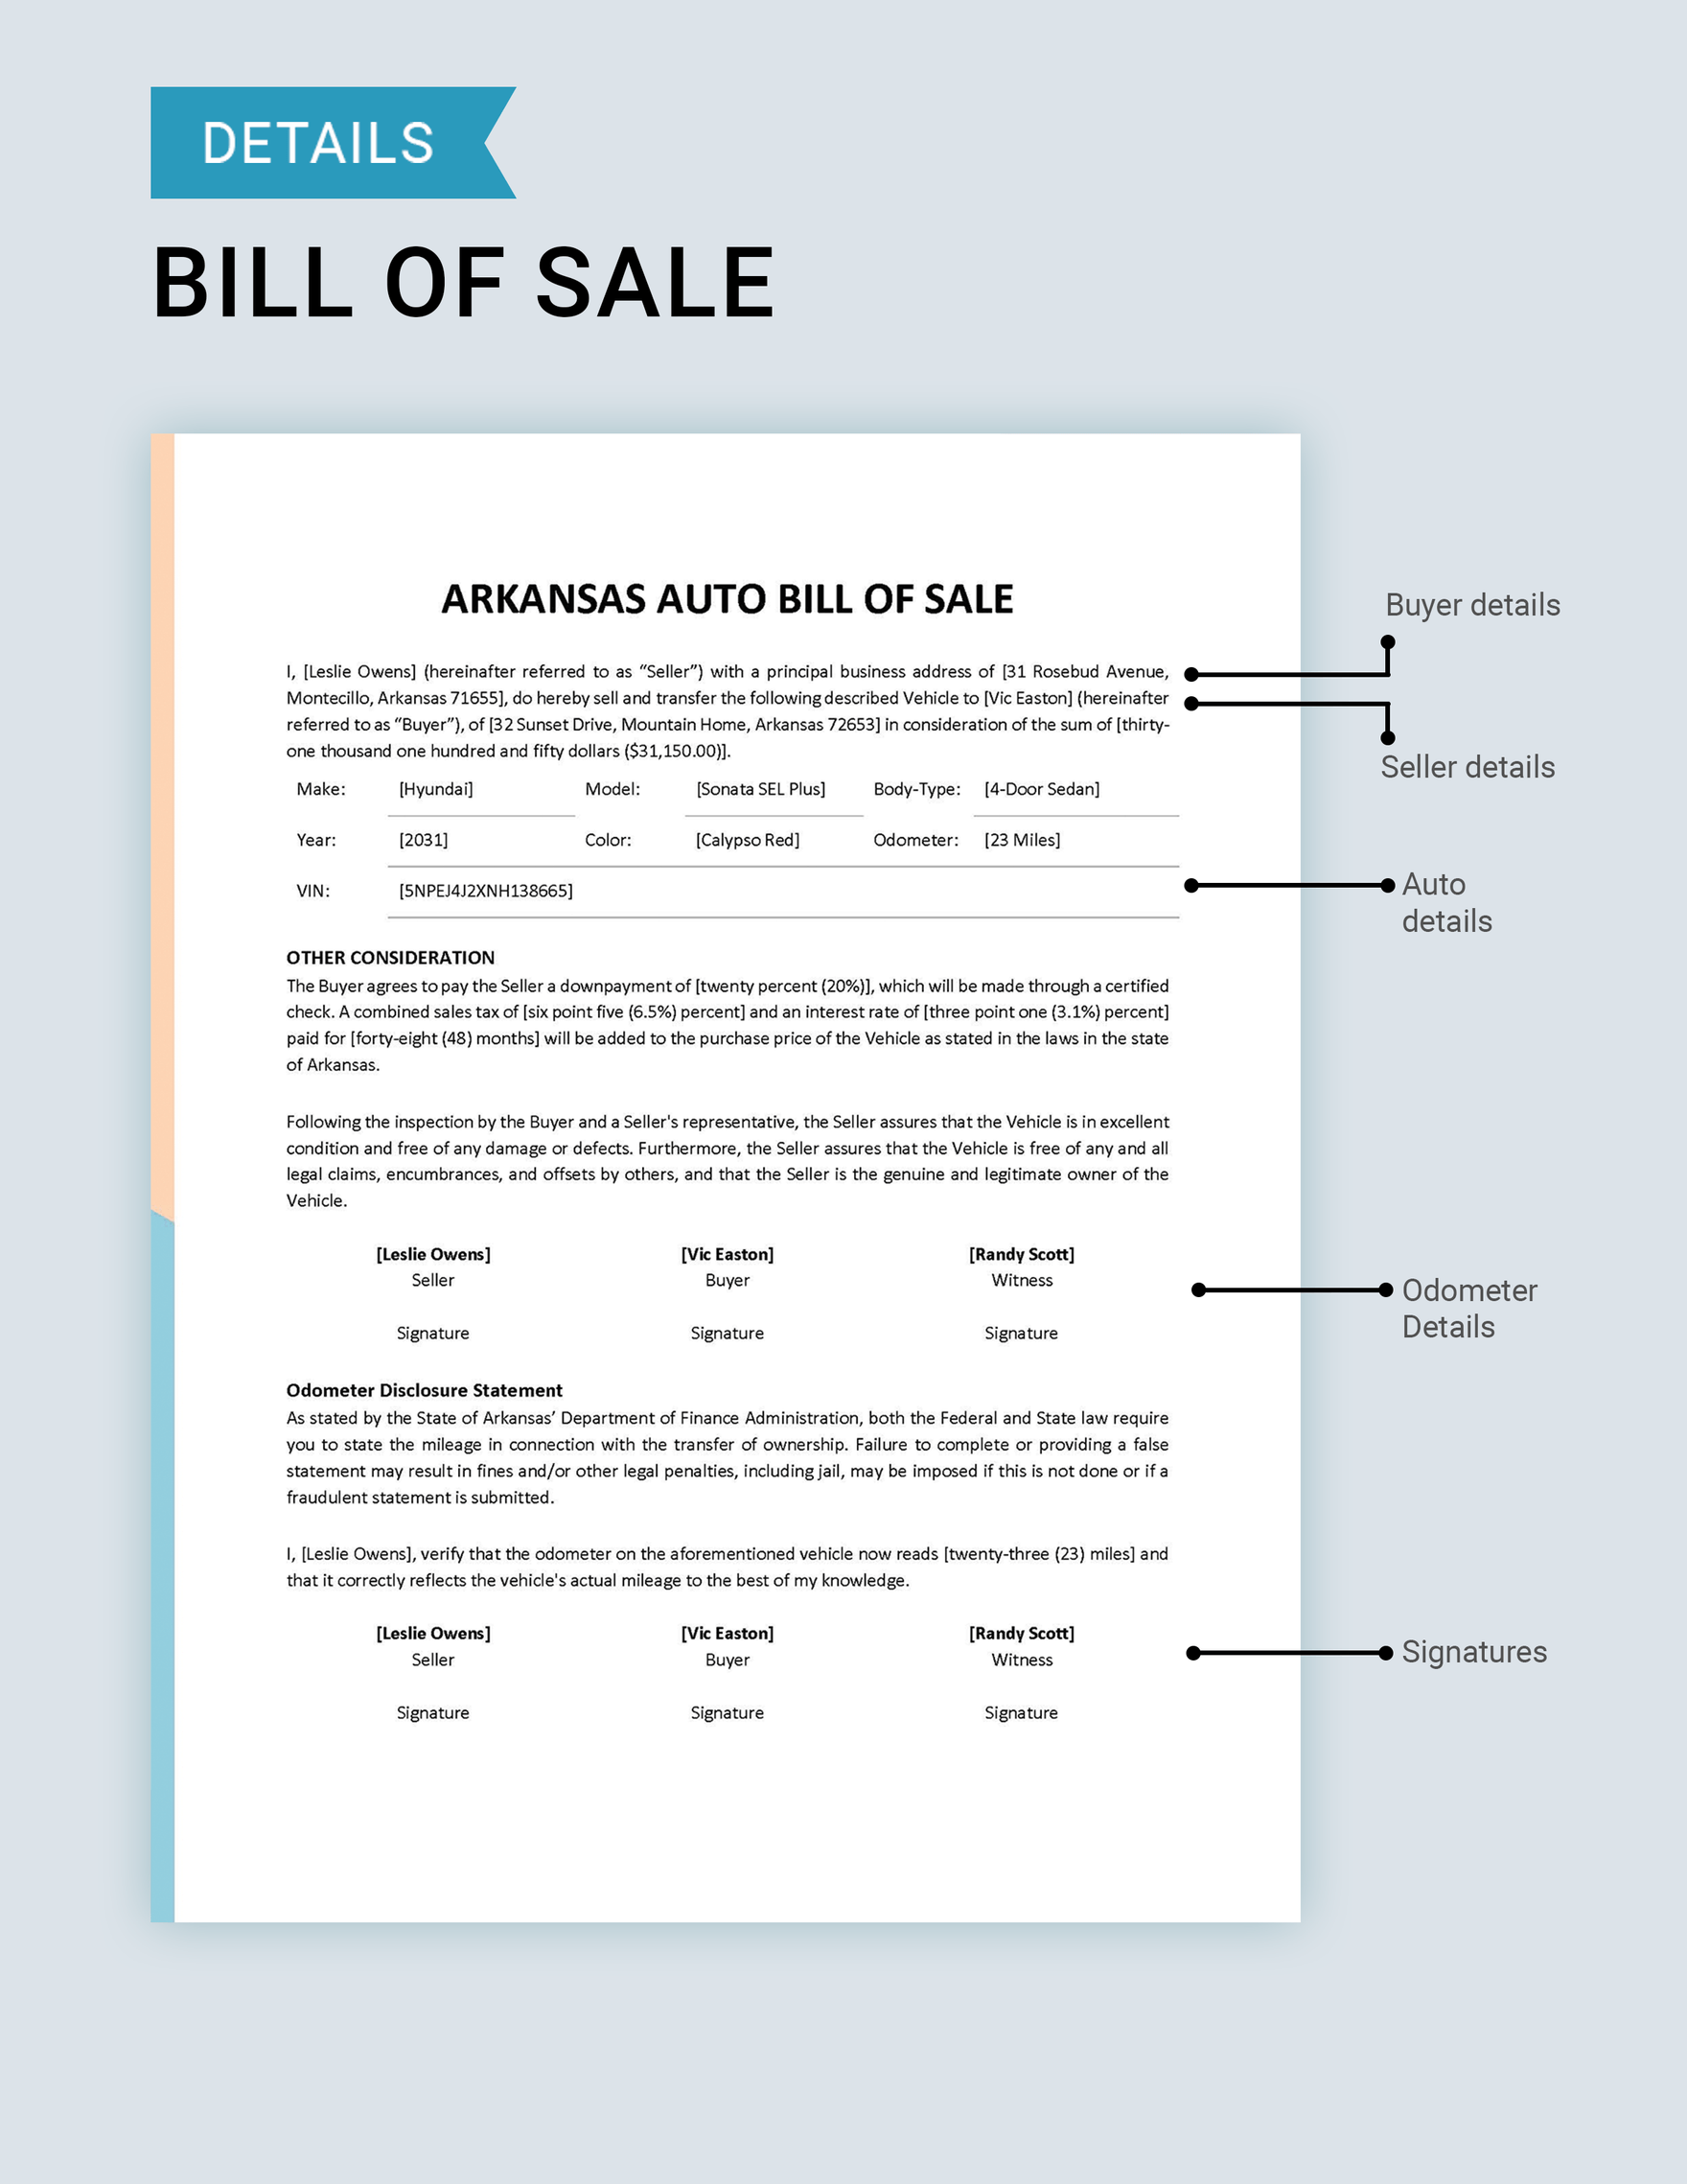 Arkansas Auto Bill of Sale Template